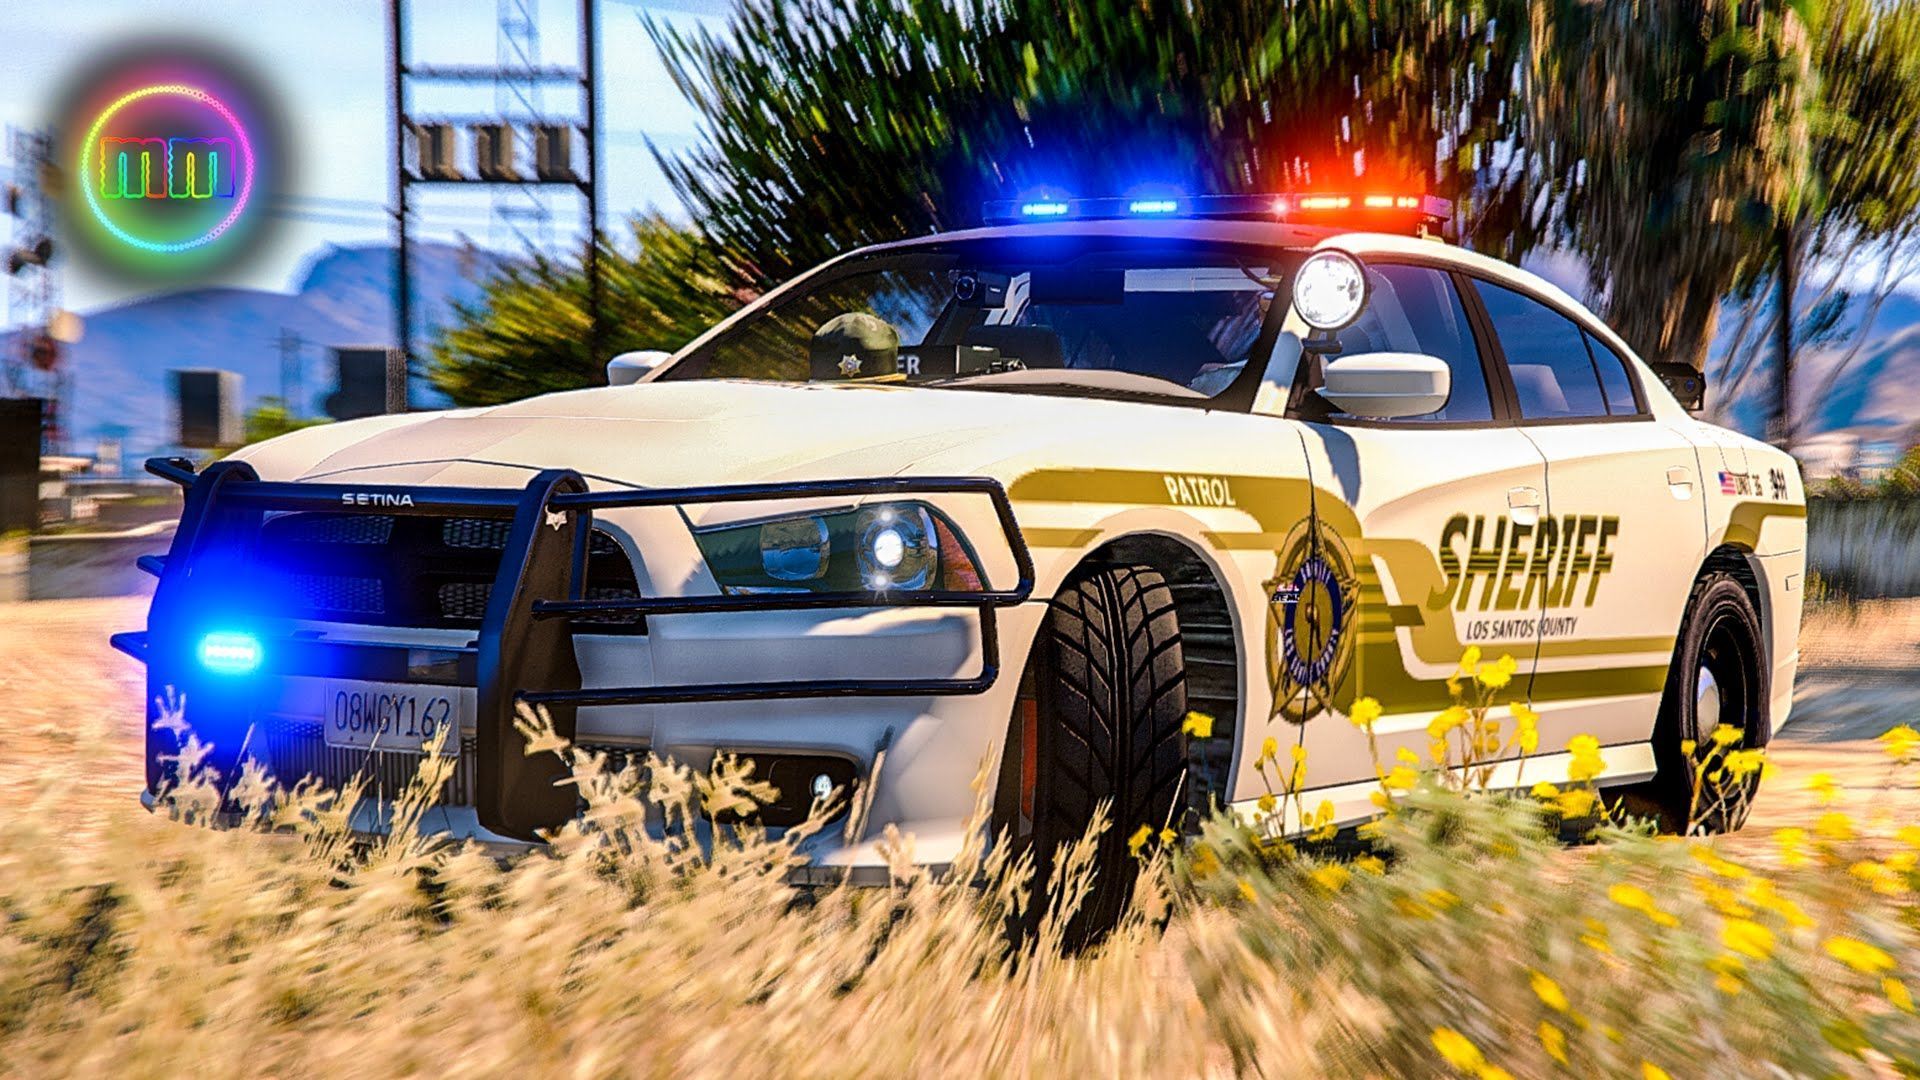 GTA 5 Police Wallpaper